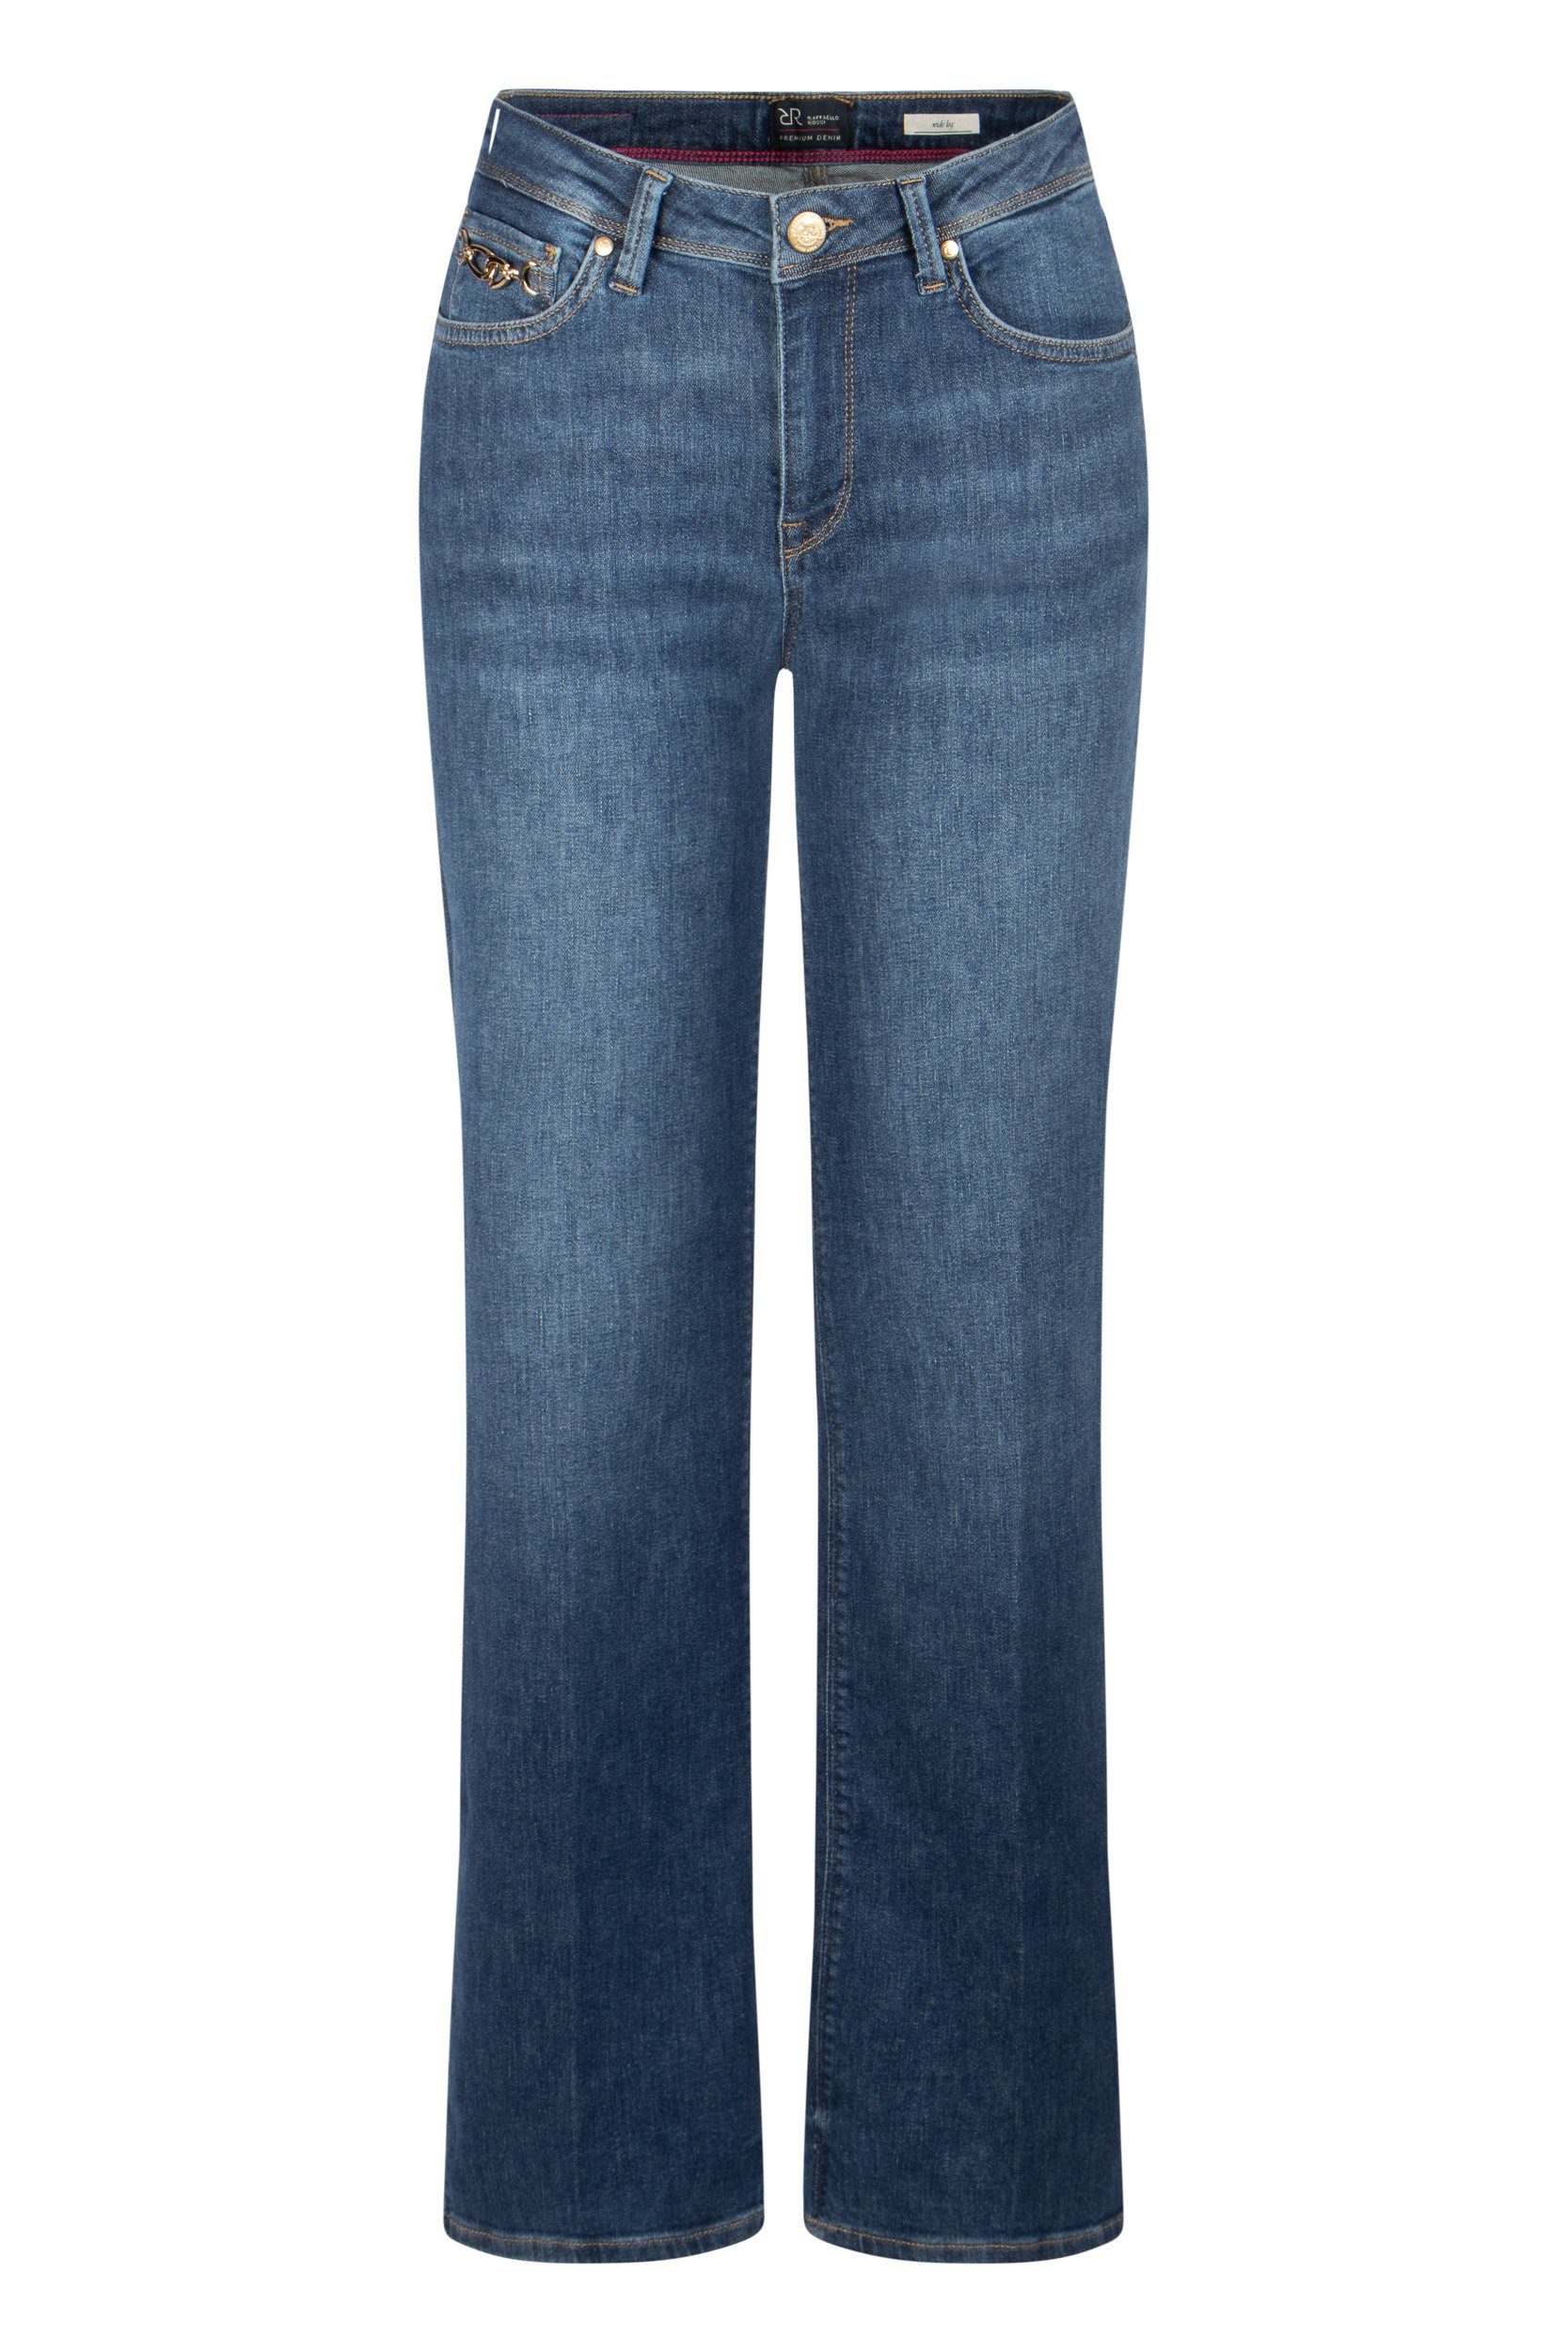 Raffaello Rossi 5-Pocket-Jeans Kira Long B | Jeans